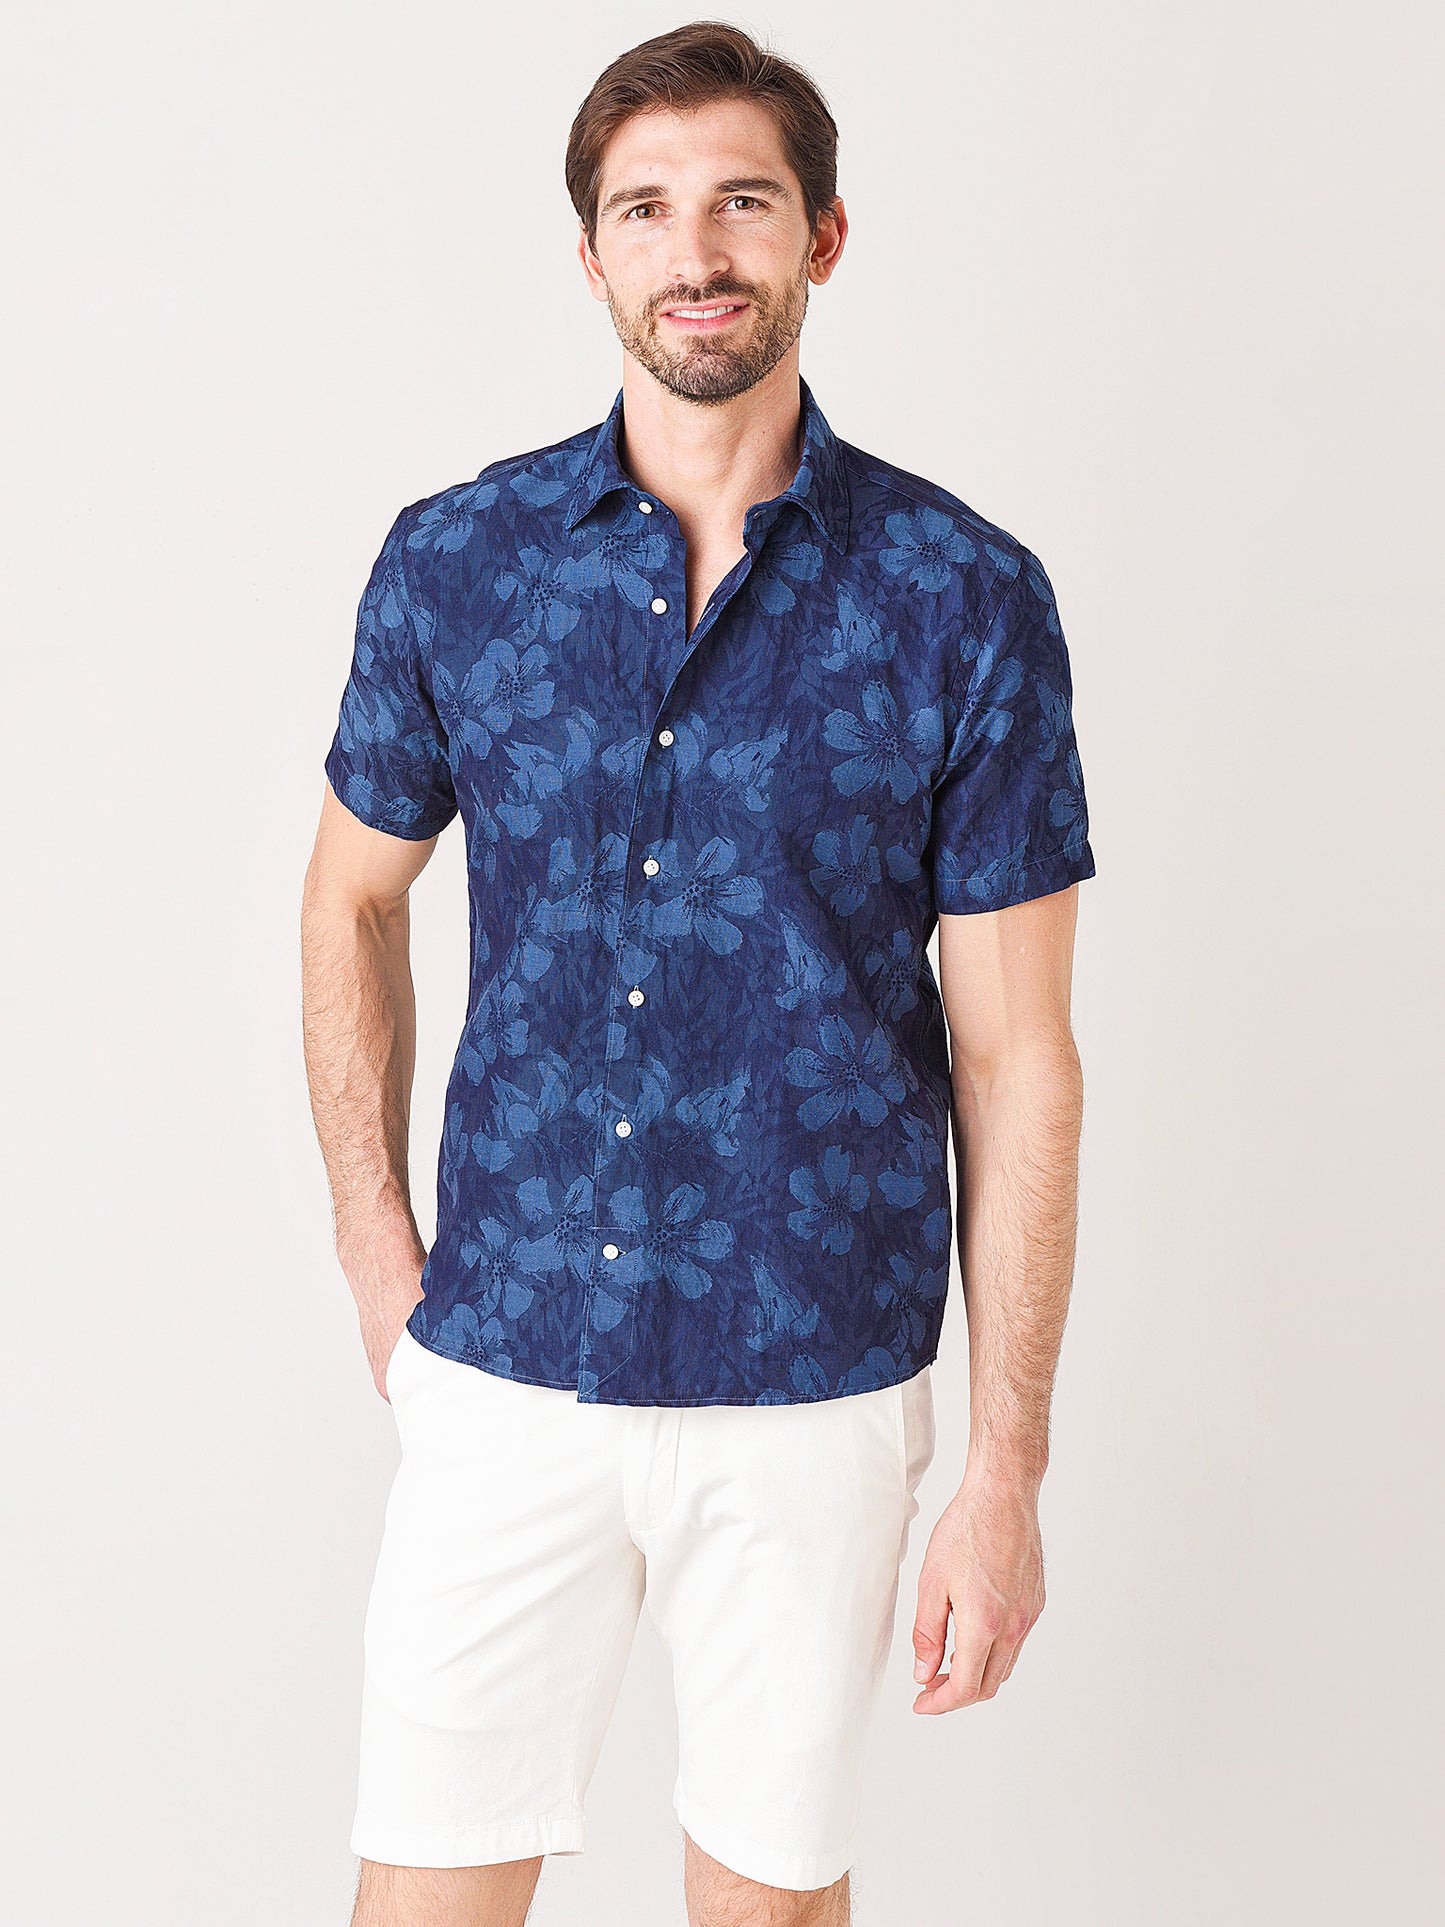 Peter Millar Collection Men's Indigo Floral Jacquard Short-Sleeve Sport Shirt